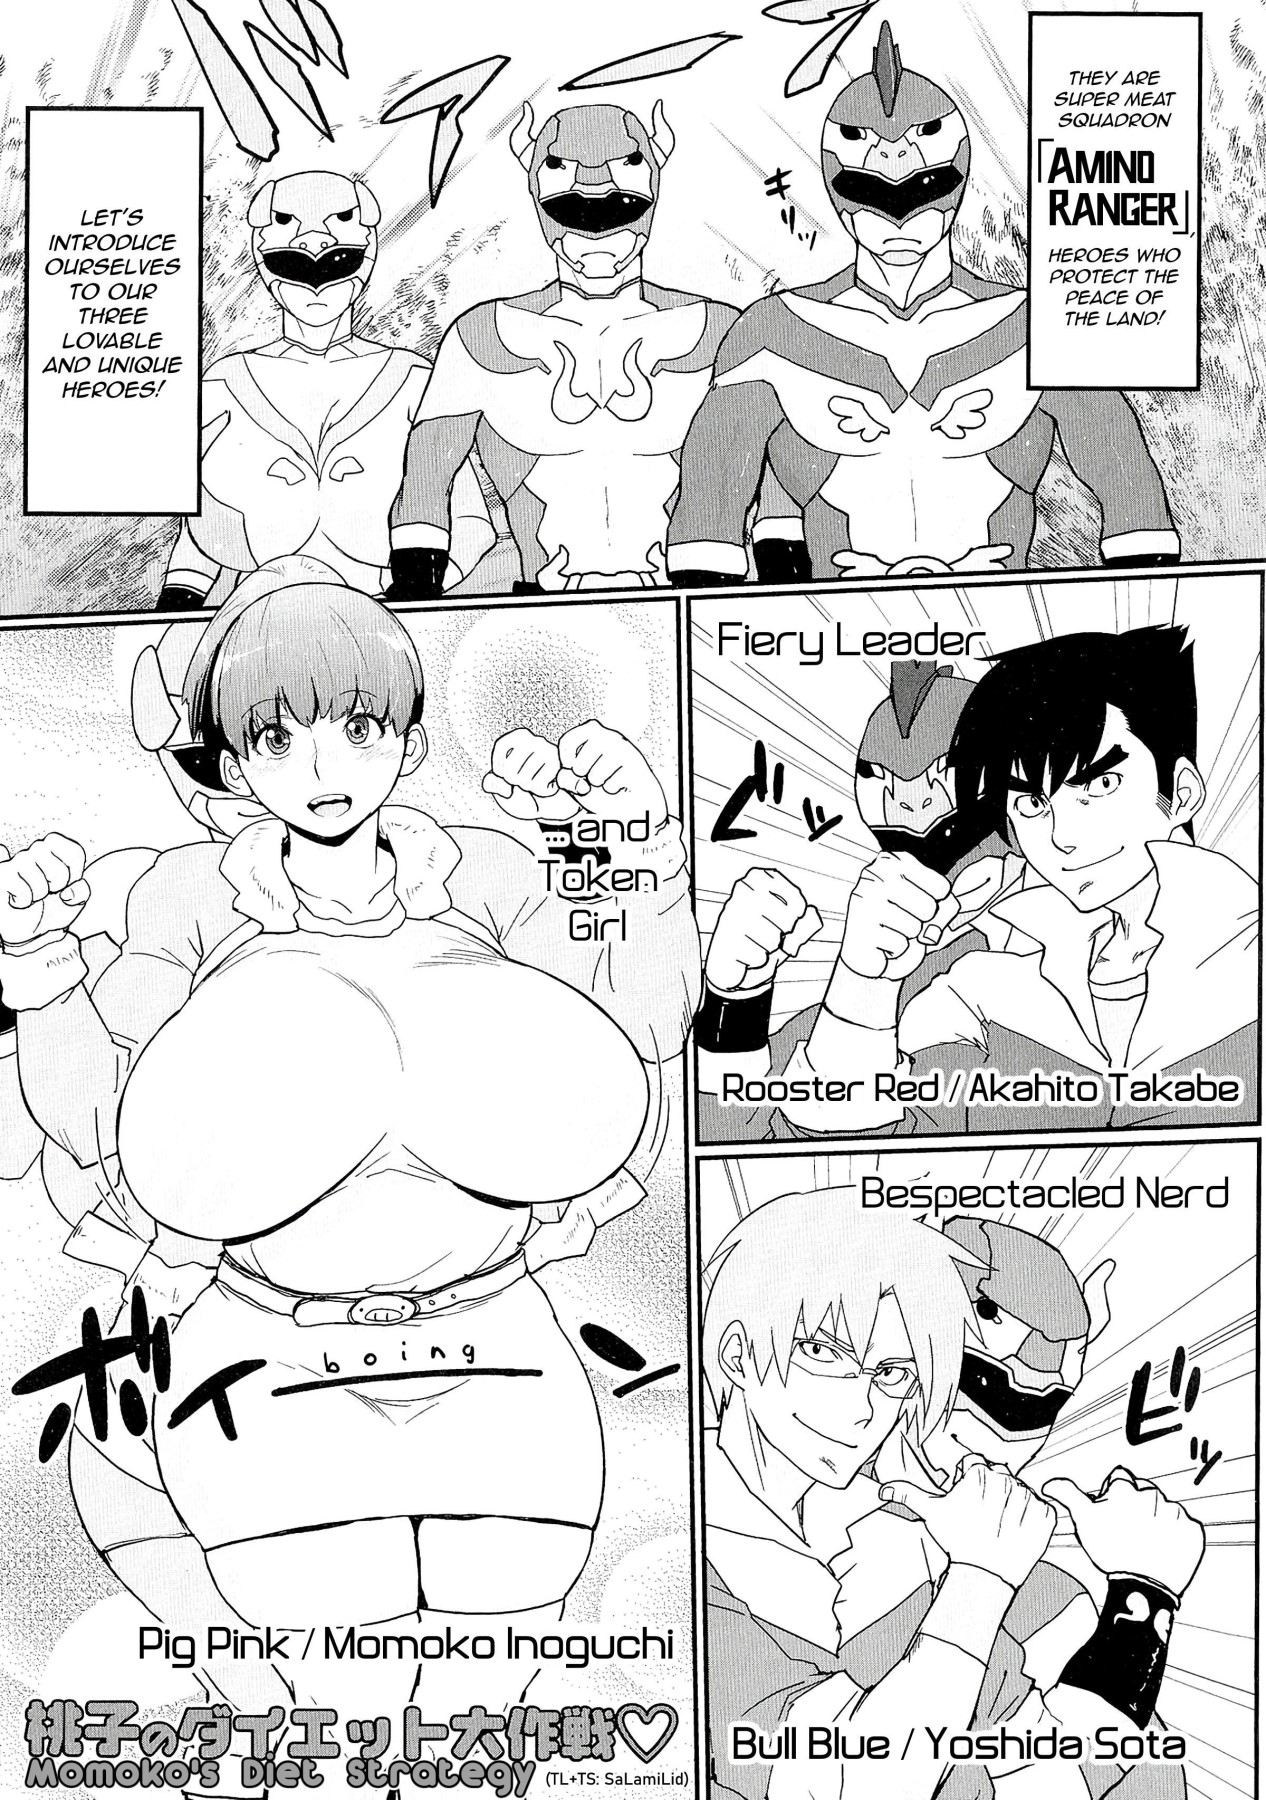 Hentai Manga Comic-Momoko's Diet Strategy-Read-1